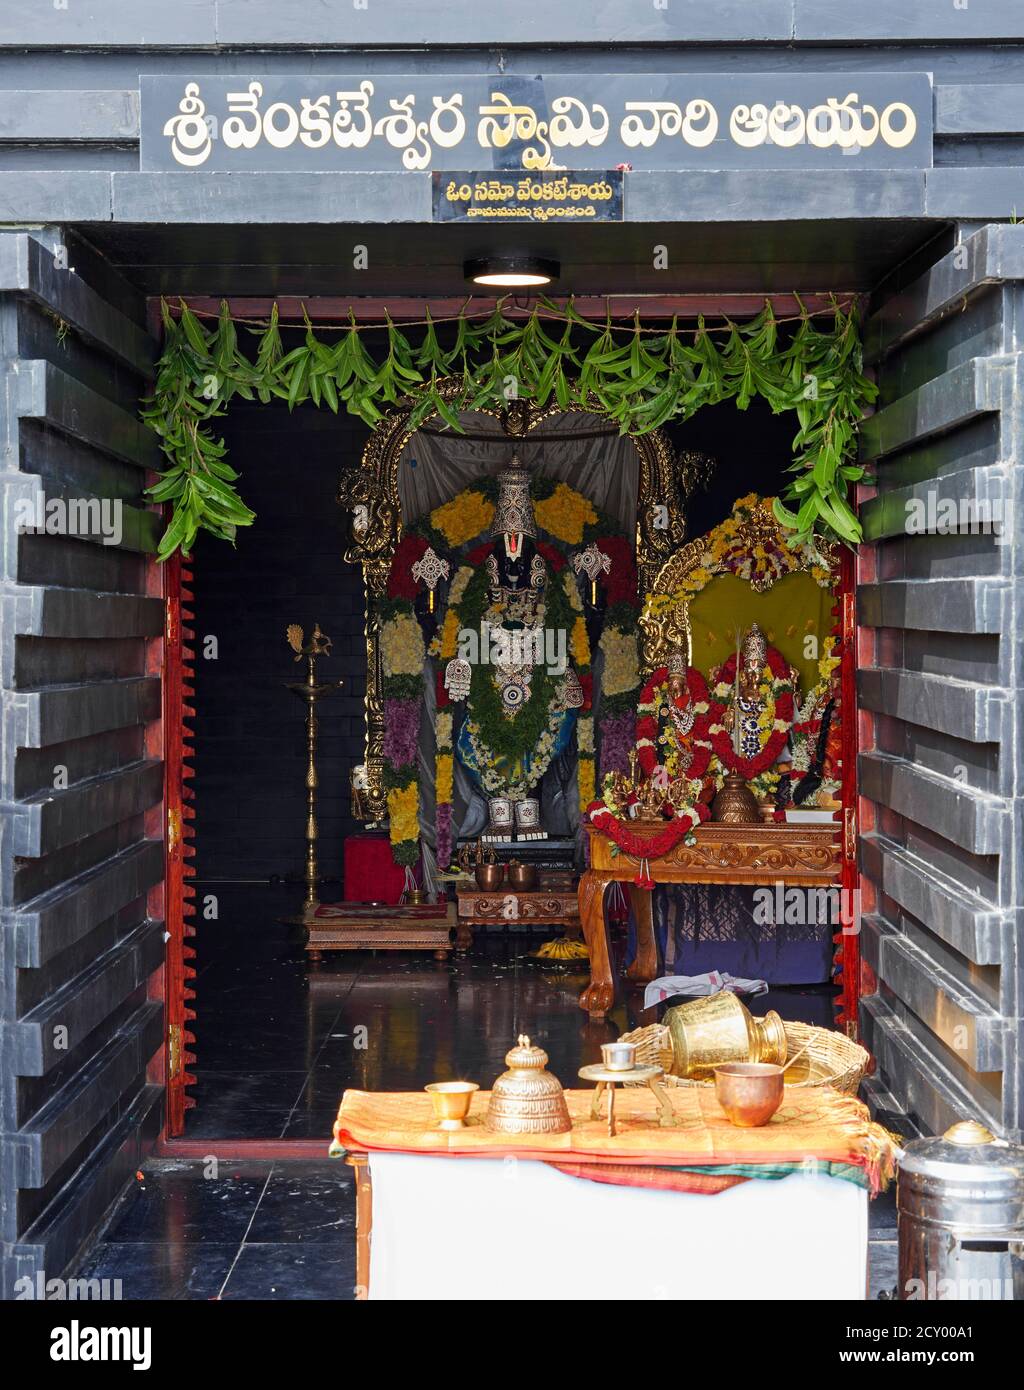 Insgesamt Blick auf den Tempel. Balaji-Tempel, Andhra Pradesh, Indien. Architekt: Sameep Padora und Mitarbeiter , 2020. Stockfoto